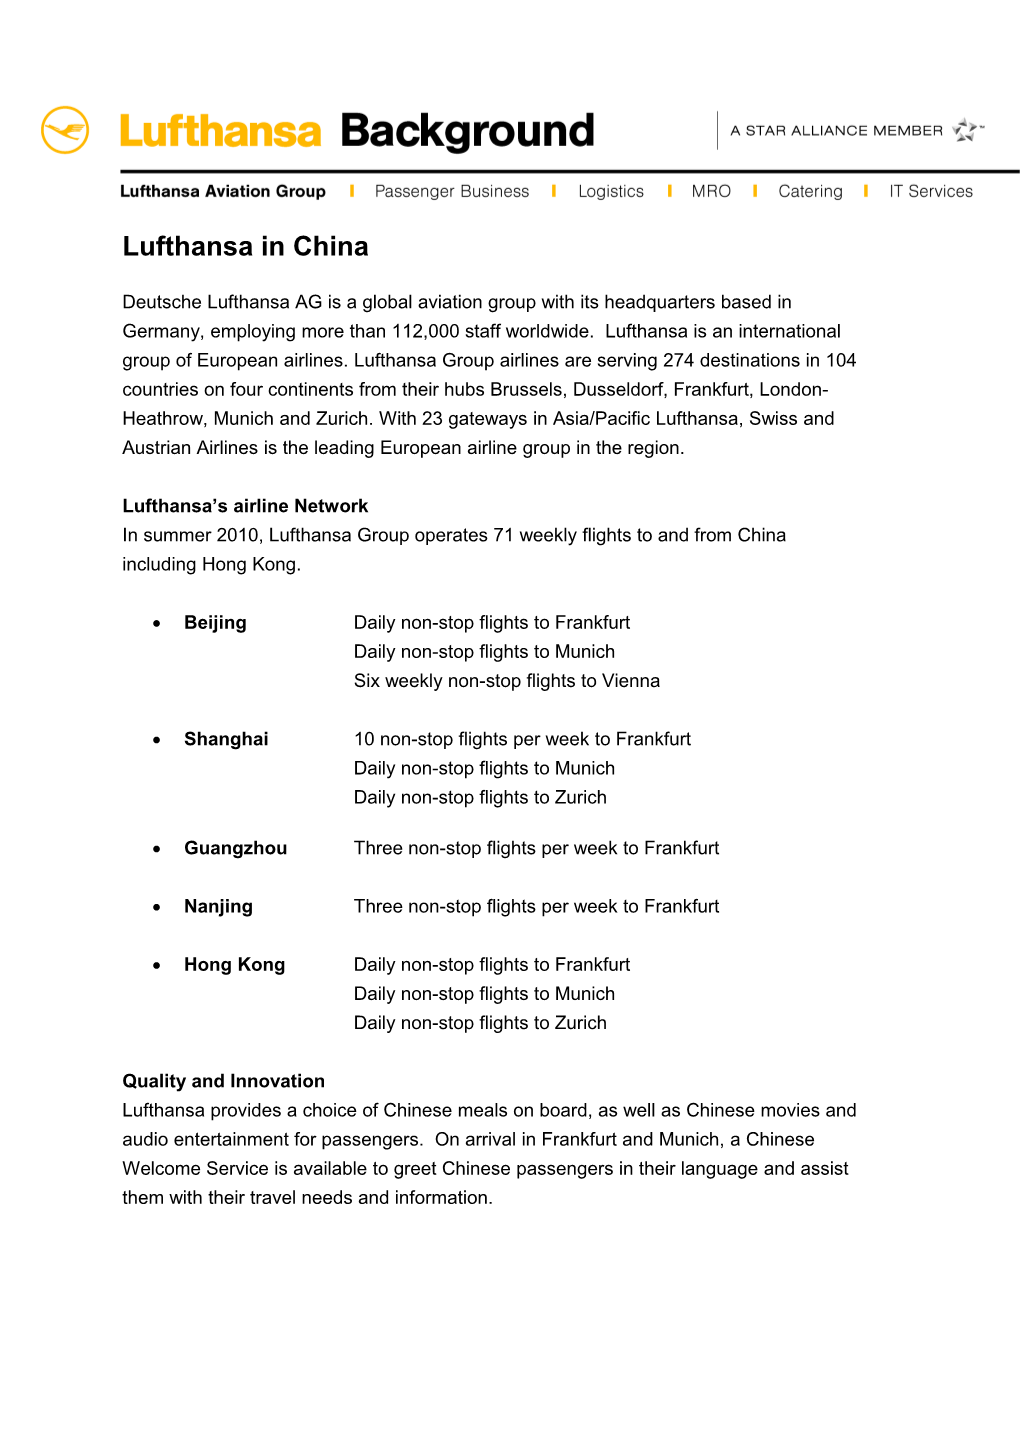 Lufthansa in China